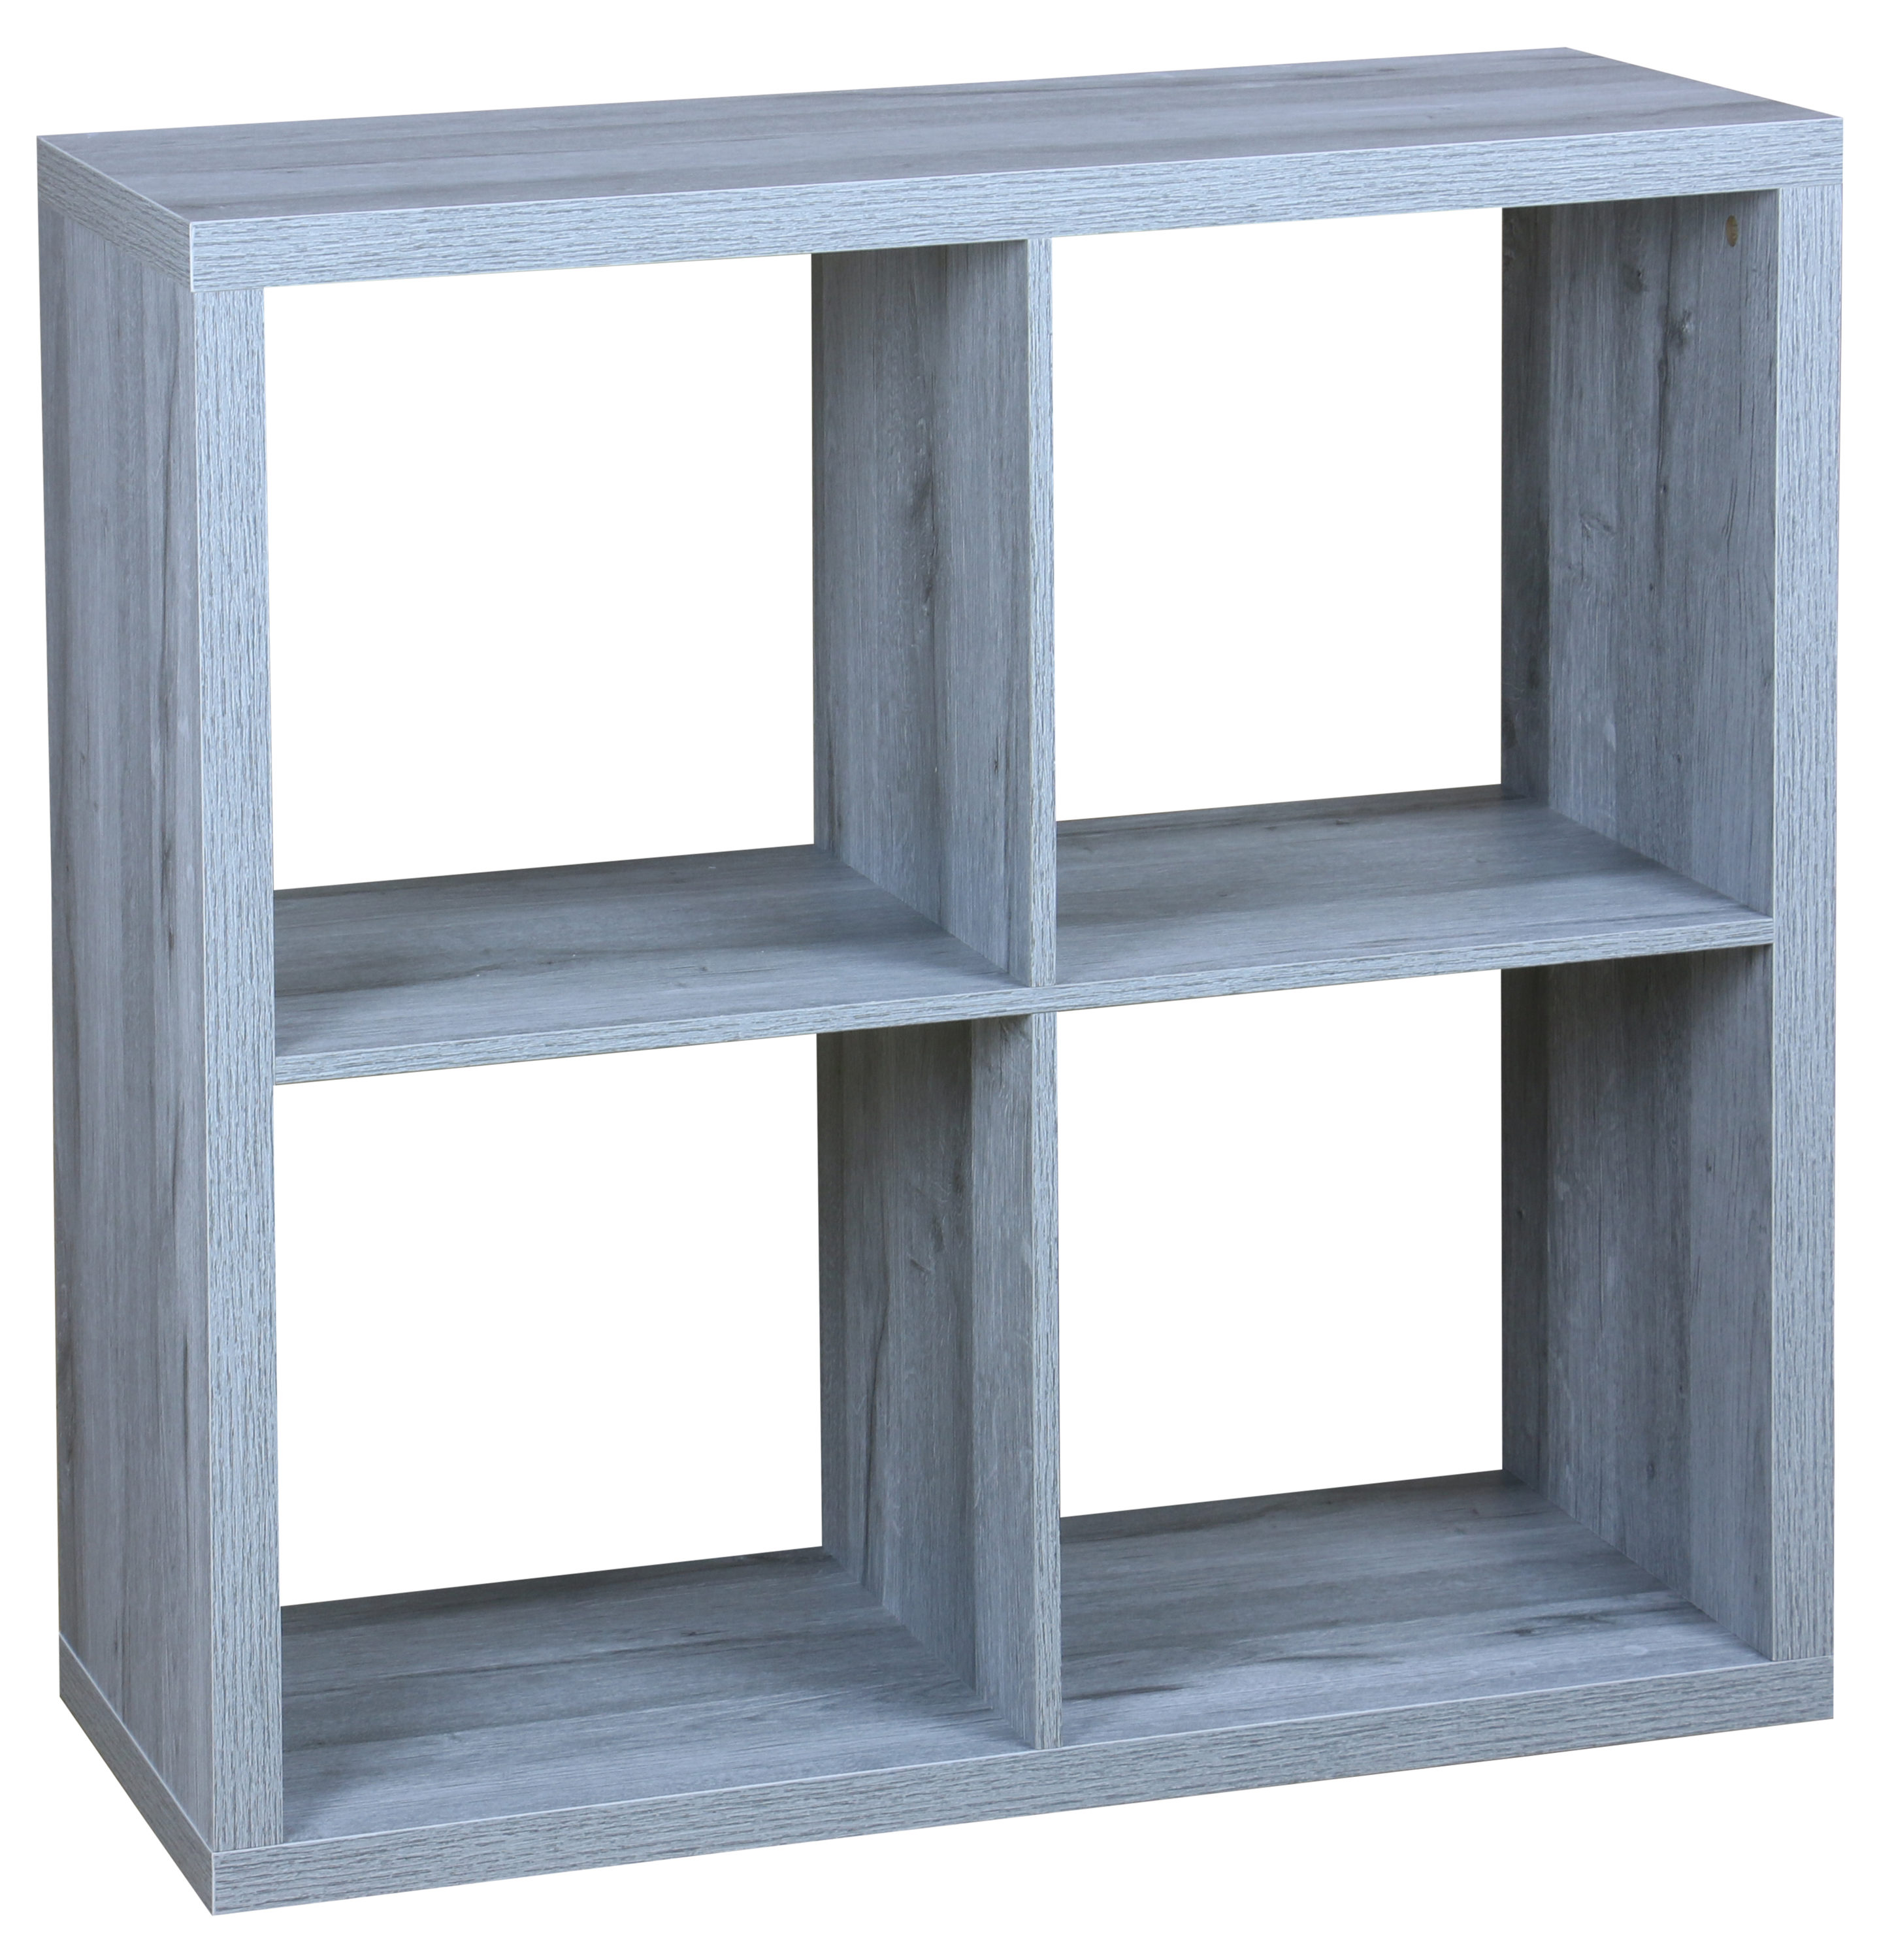 4 Cube Storage Shelving Stackable Cube Organizer Shelves Rack